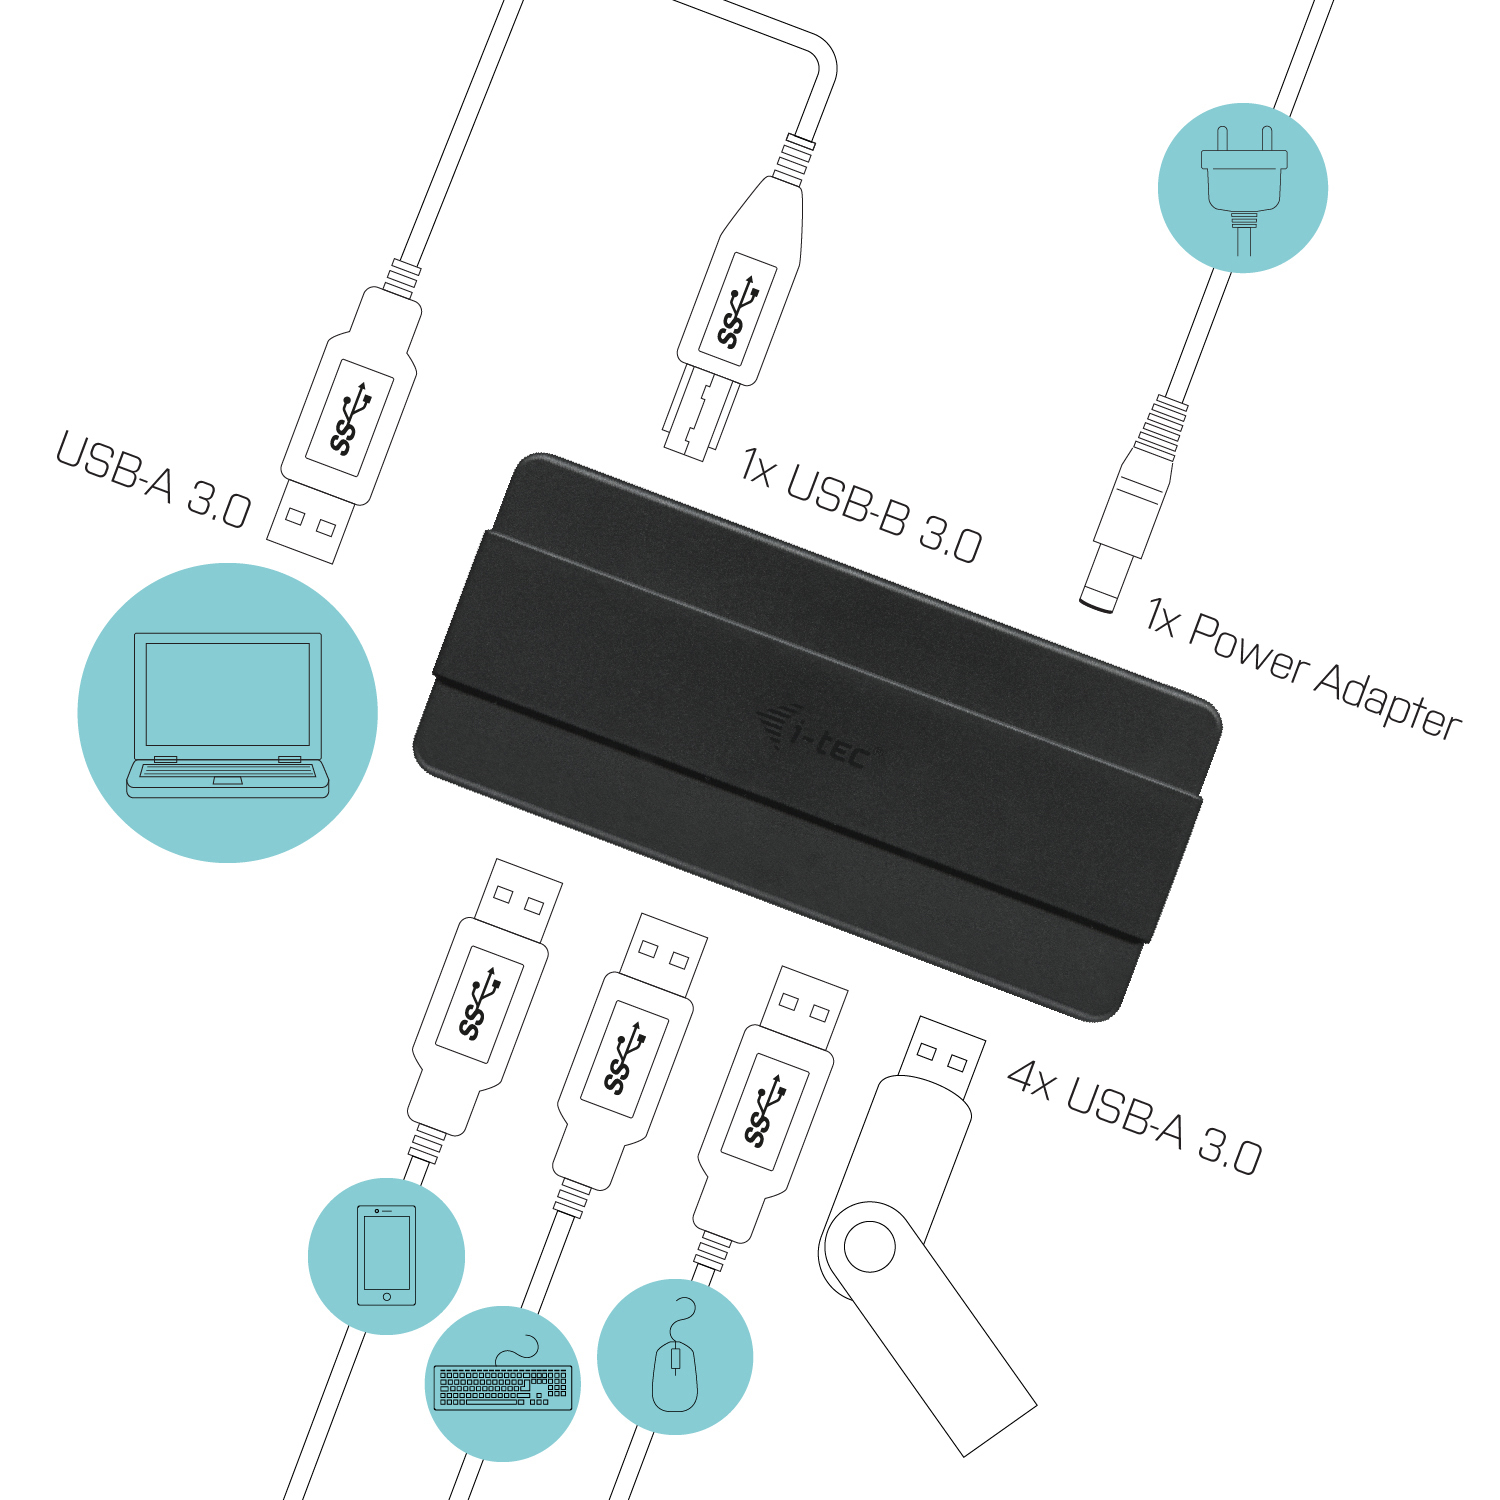 i-tec USB 3.0 Charging HUB - Hub - 4 x SuperSpeed USB 3.0